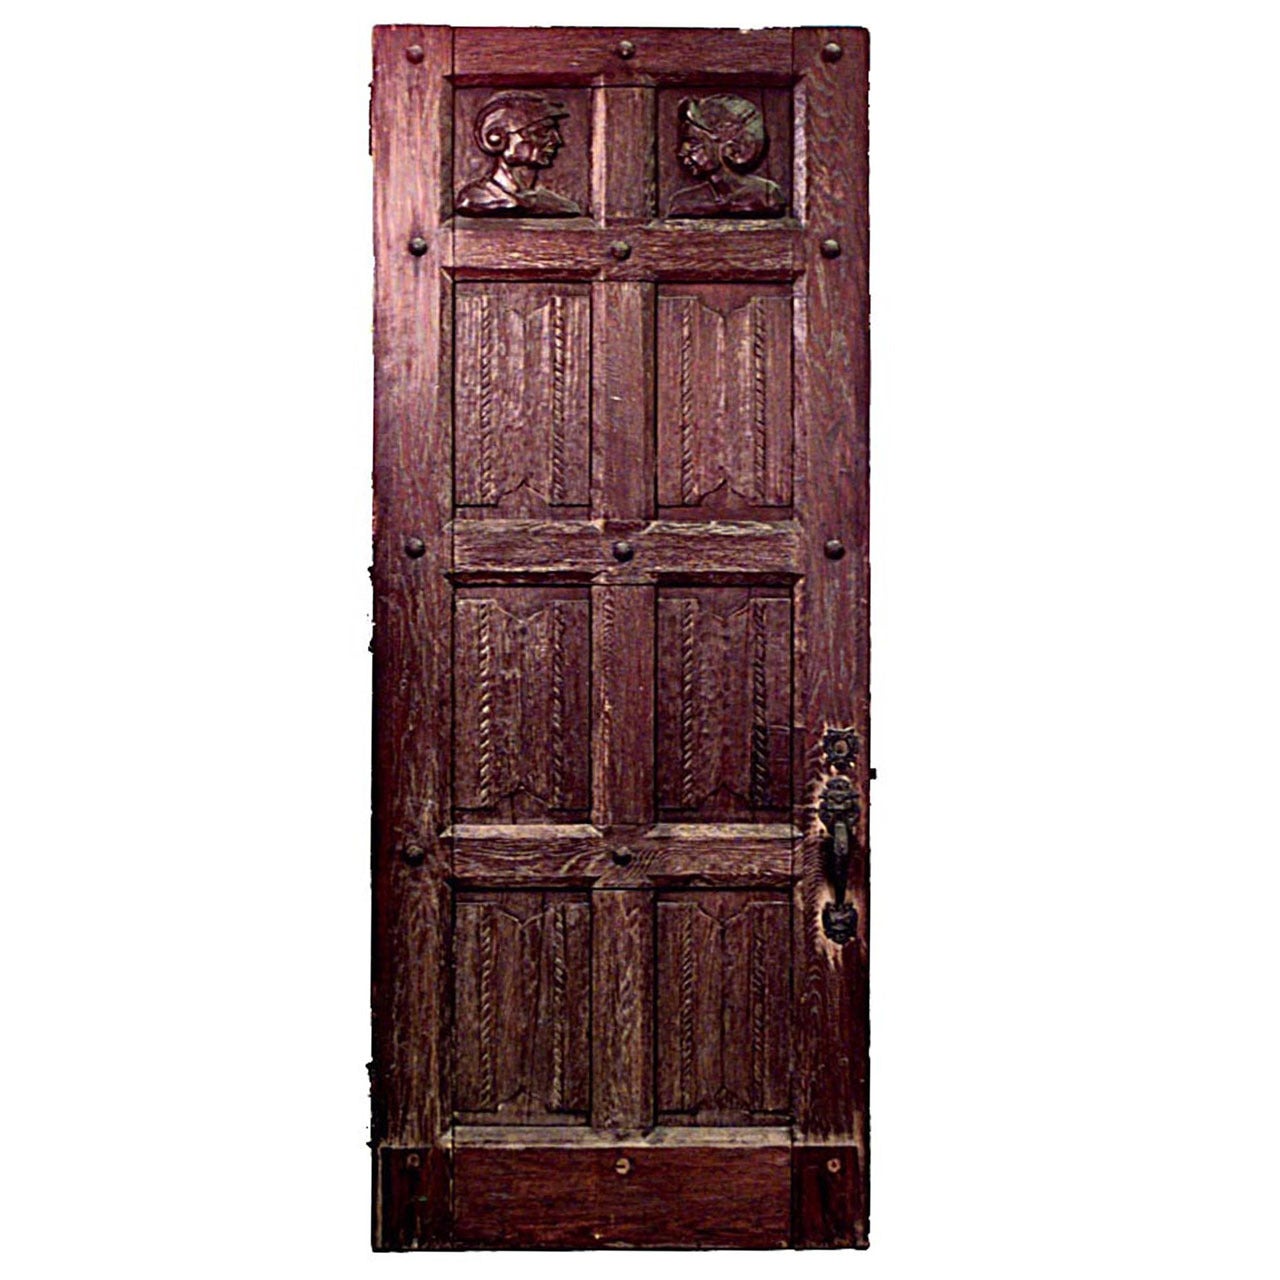 English Renaissance Revival Carved Oak Door